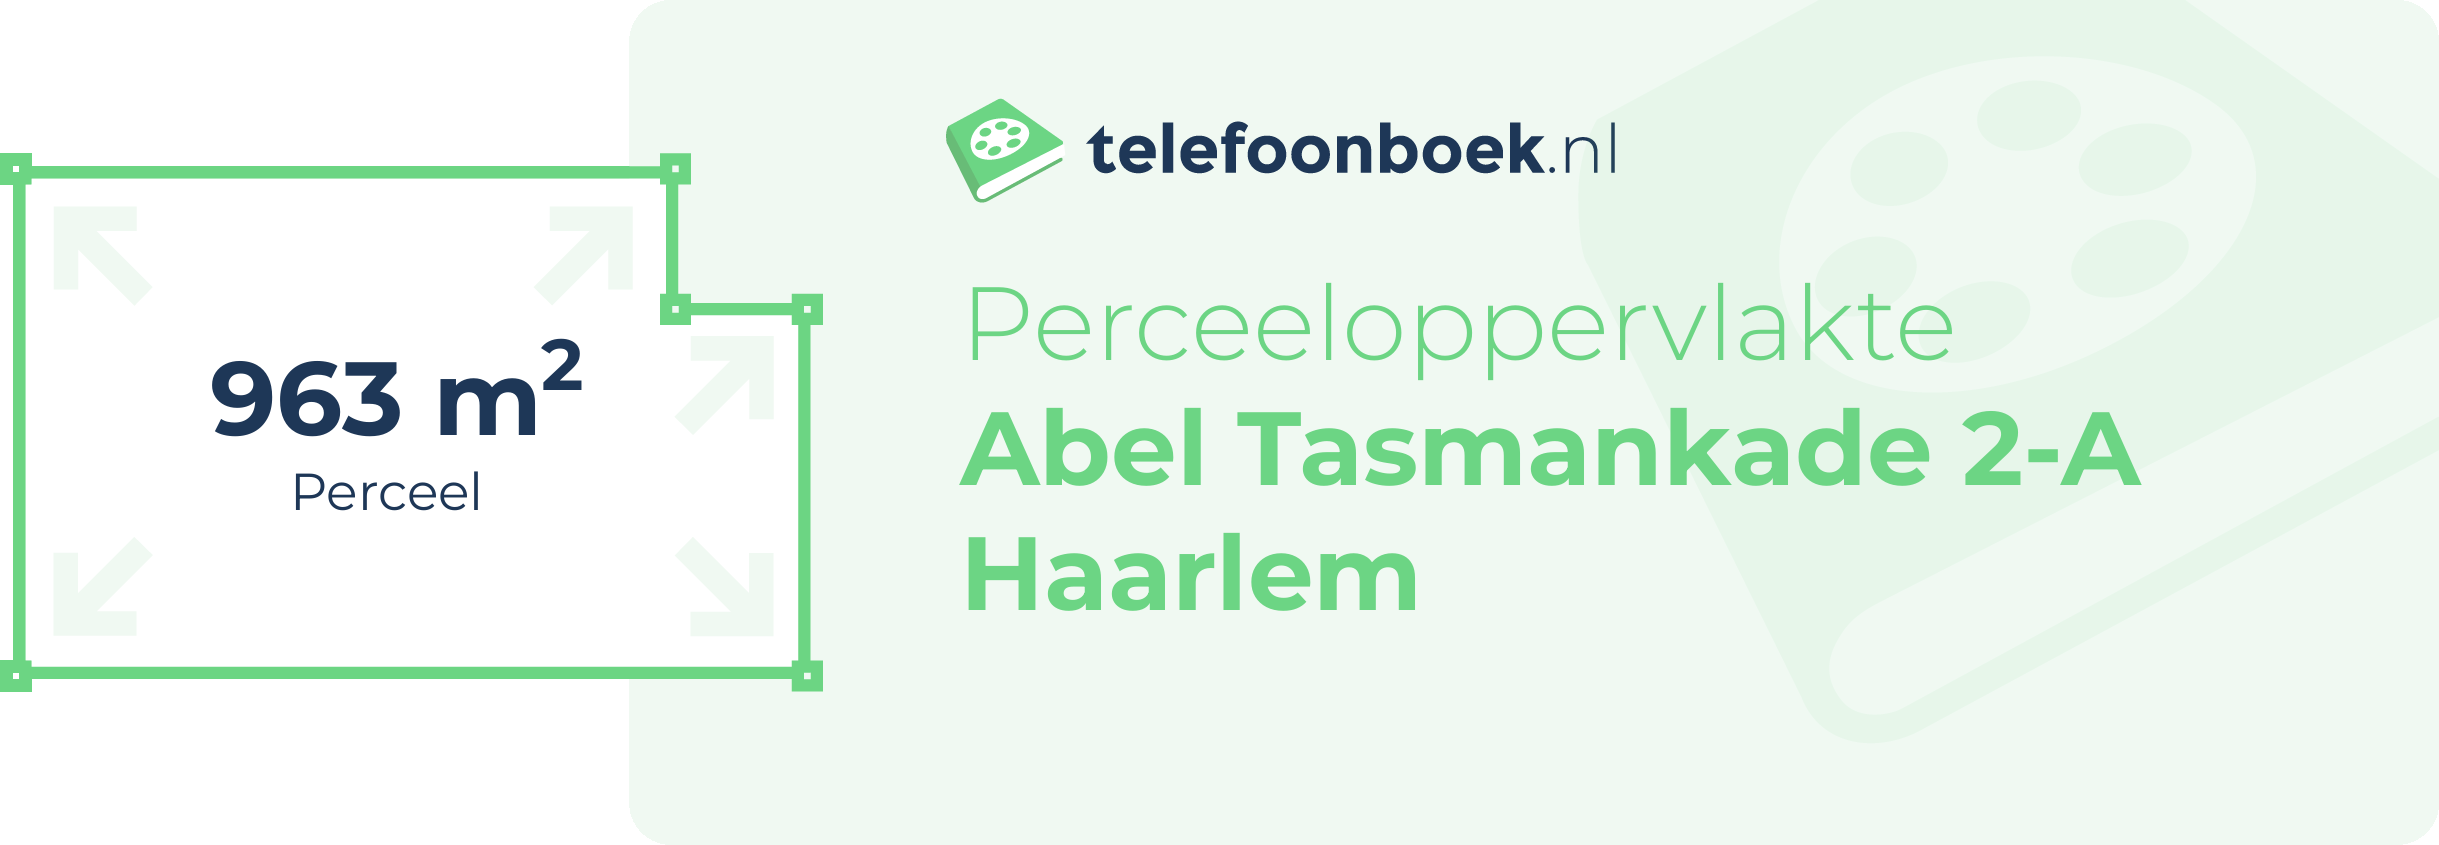 Perceeloppervlakte Abel Tasmankade 2-A Haarlem